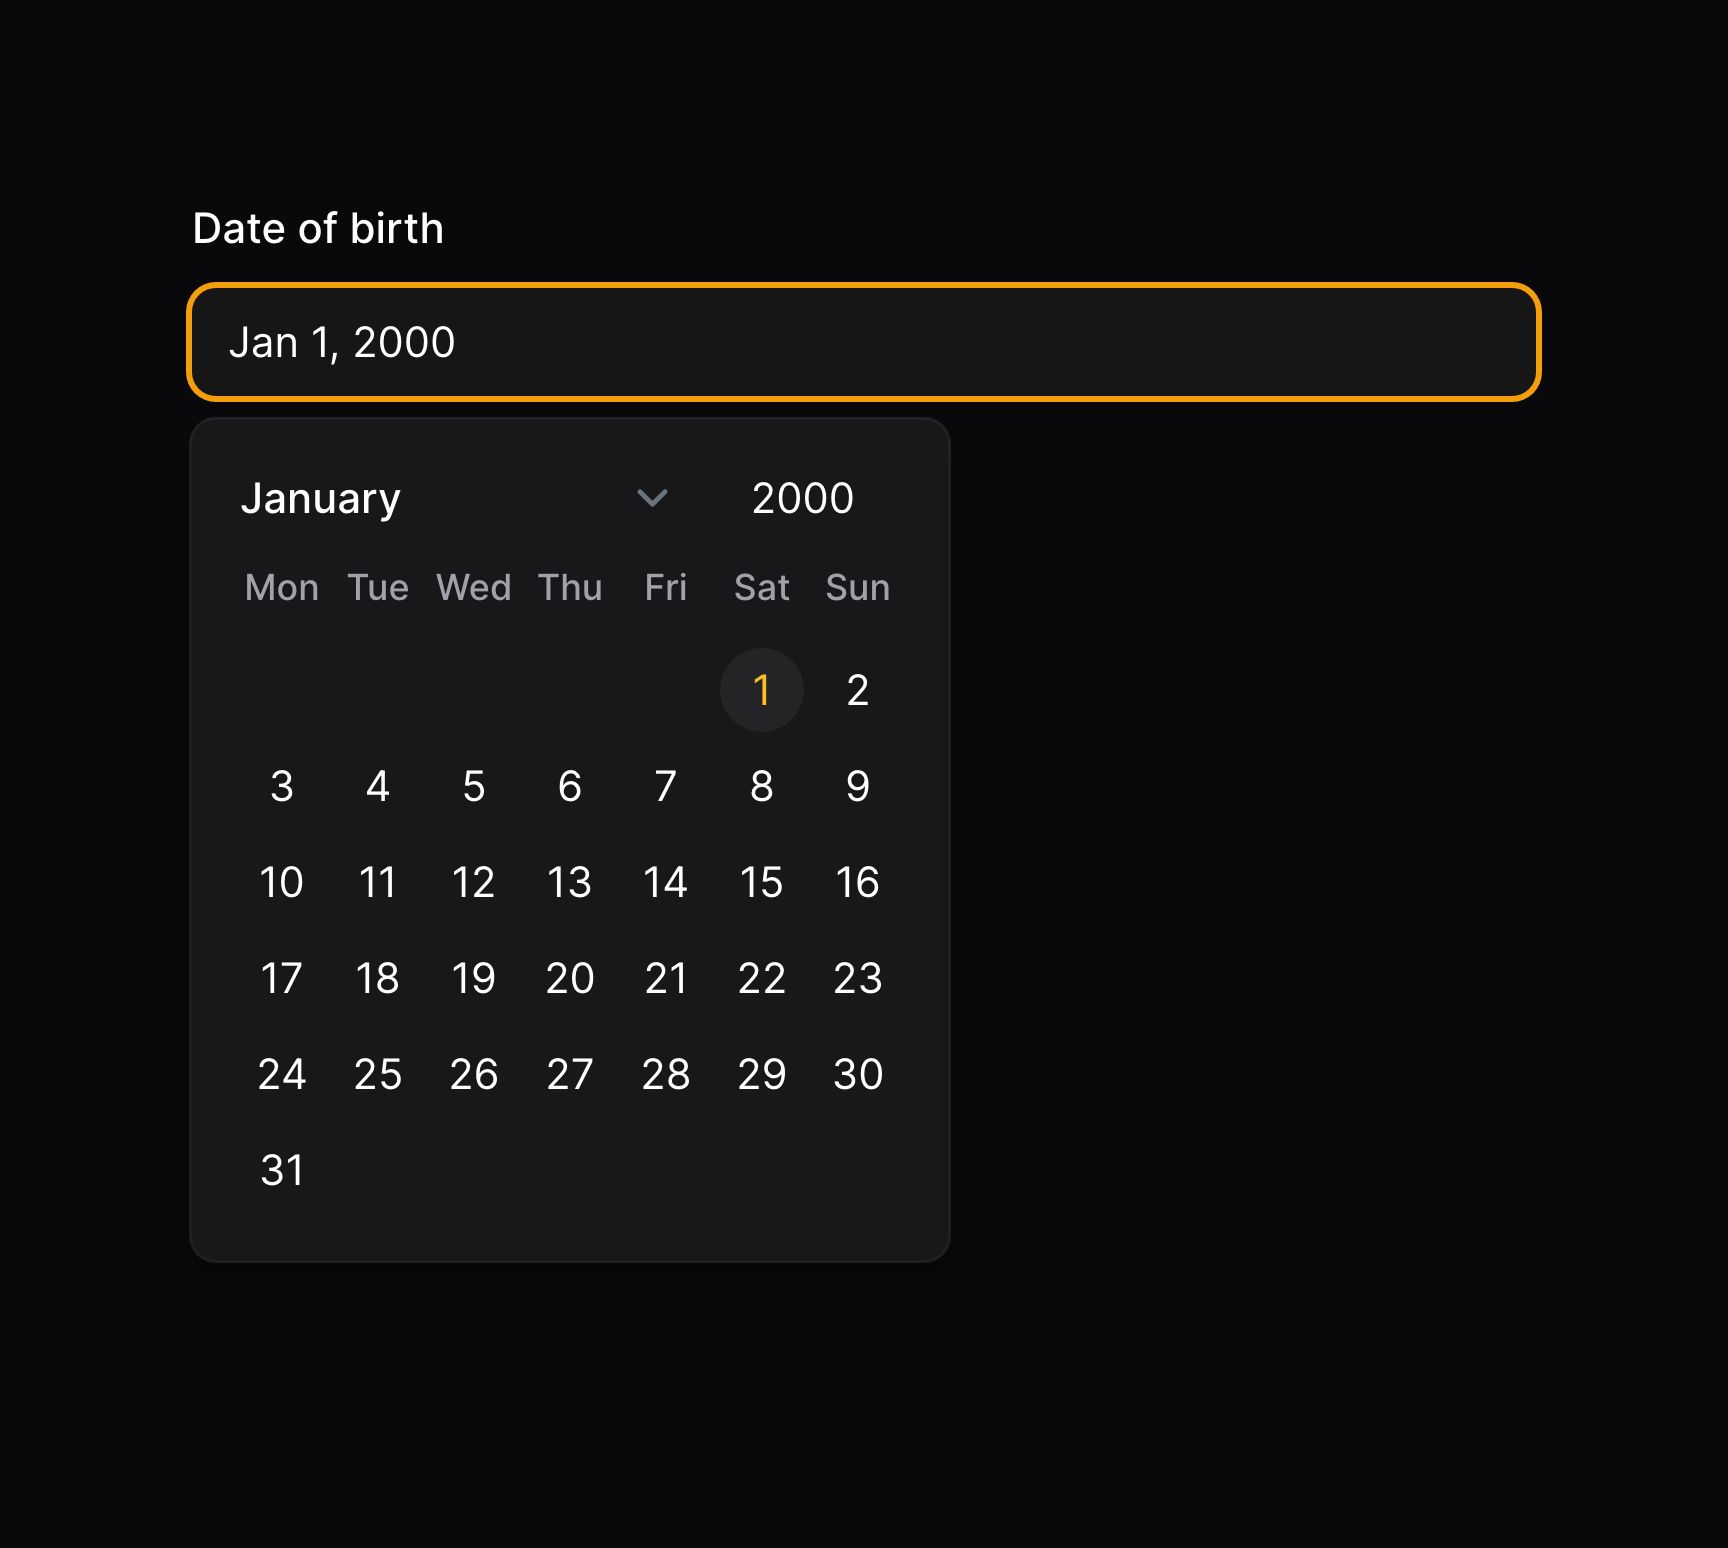 JavaScript-based date time picker